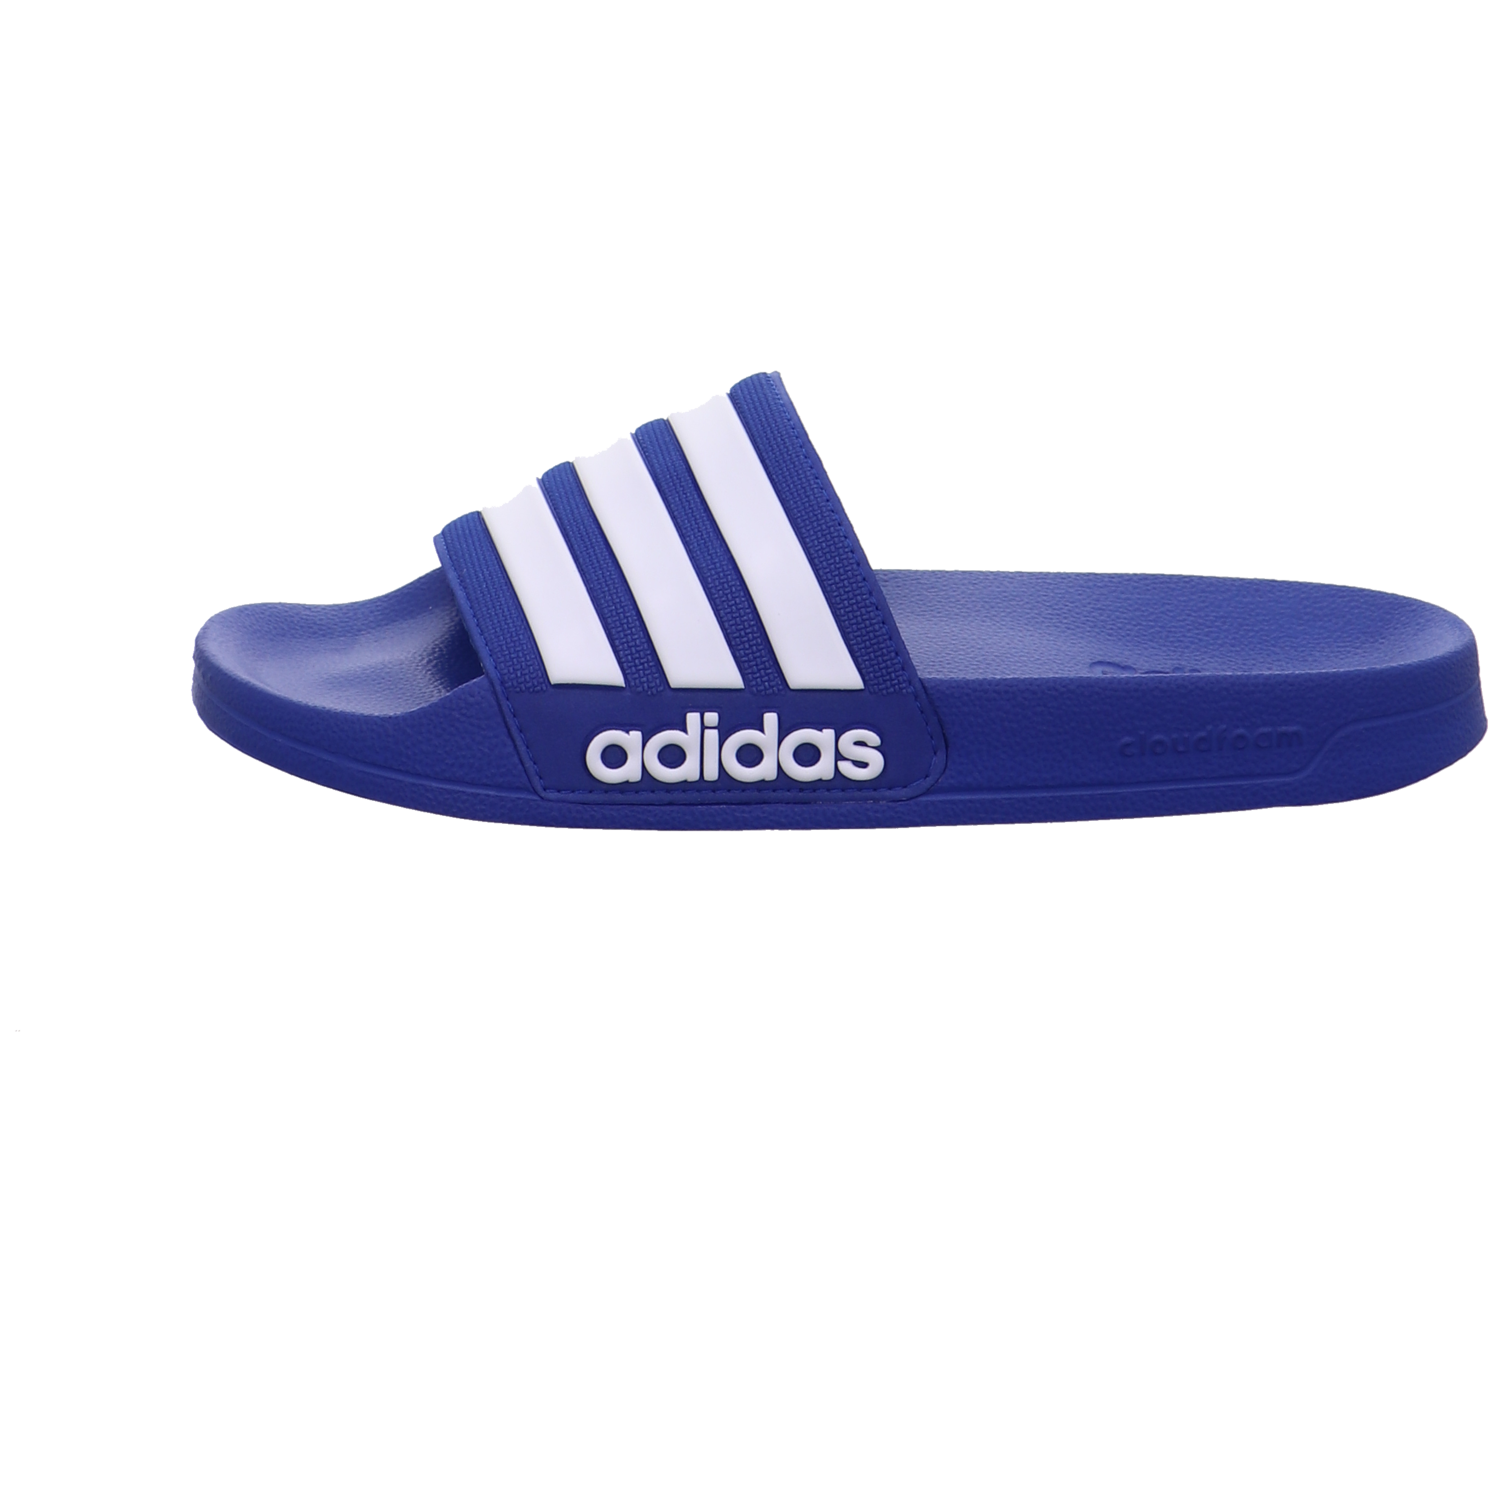 Adidas Schuhe  blau Bild1